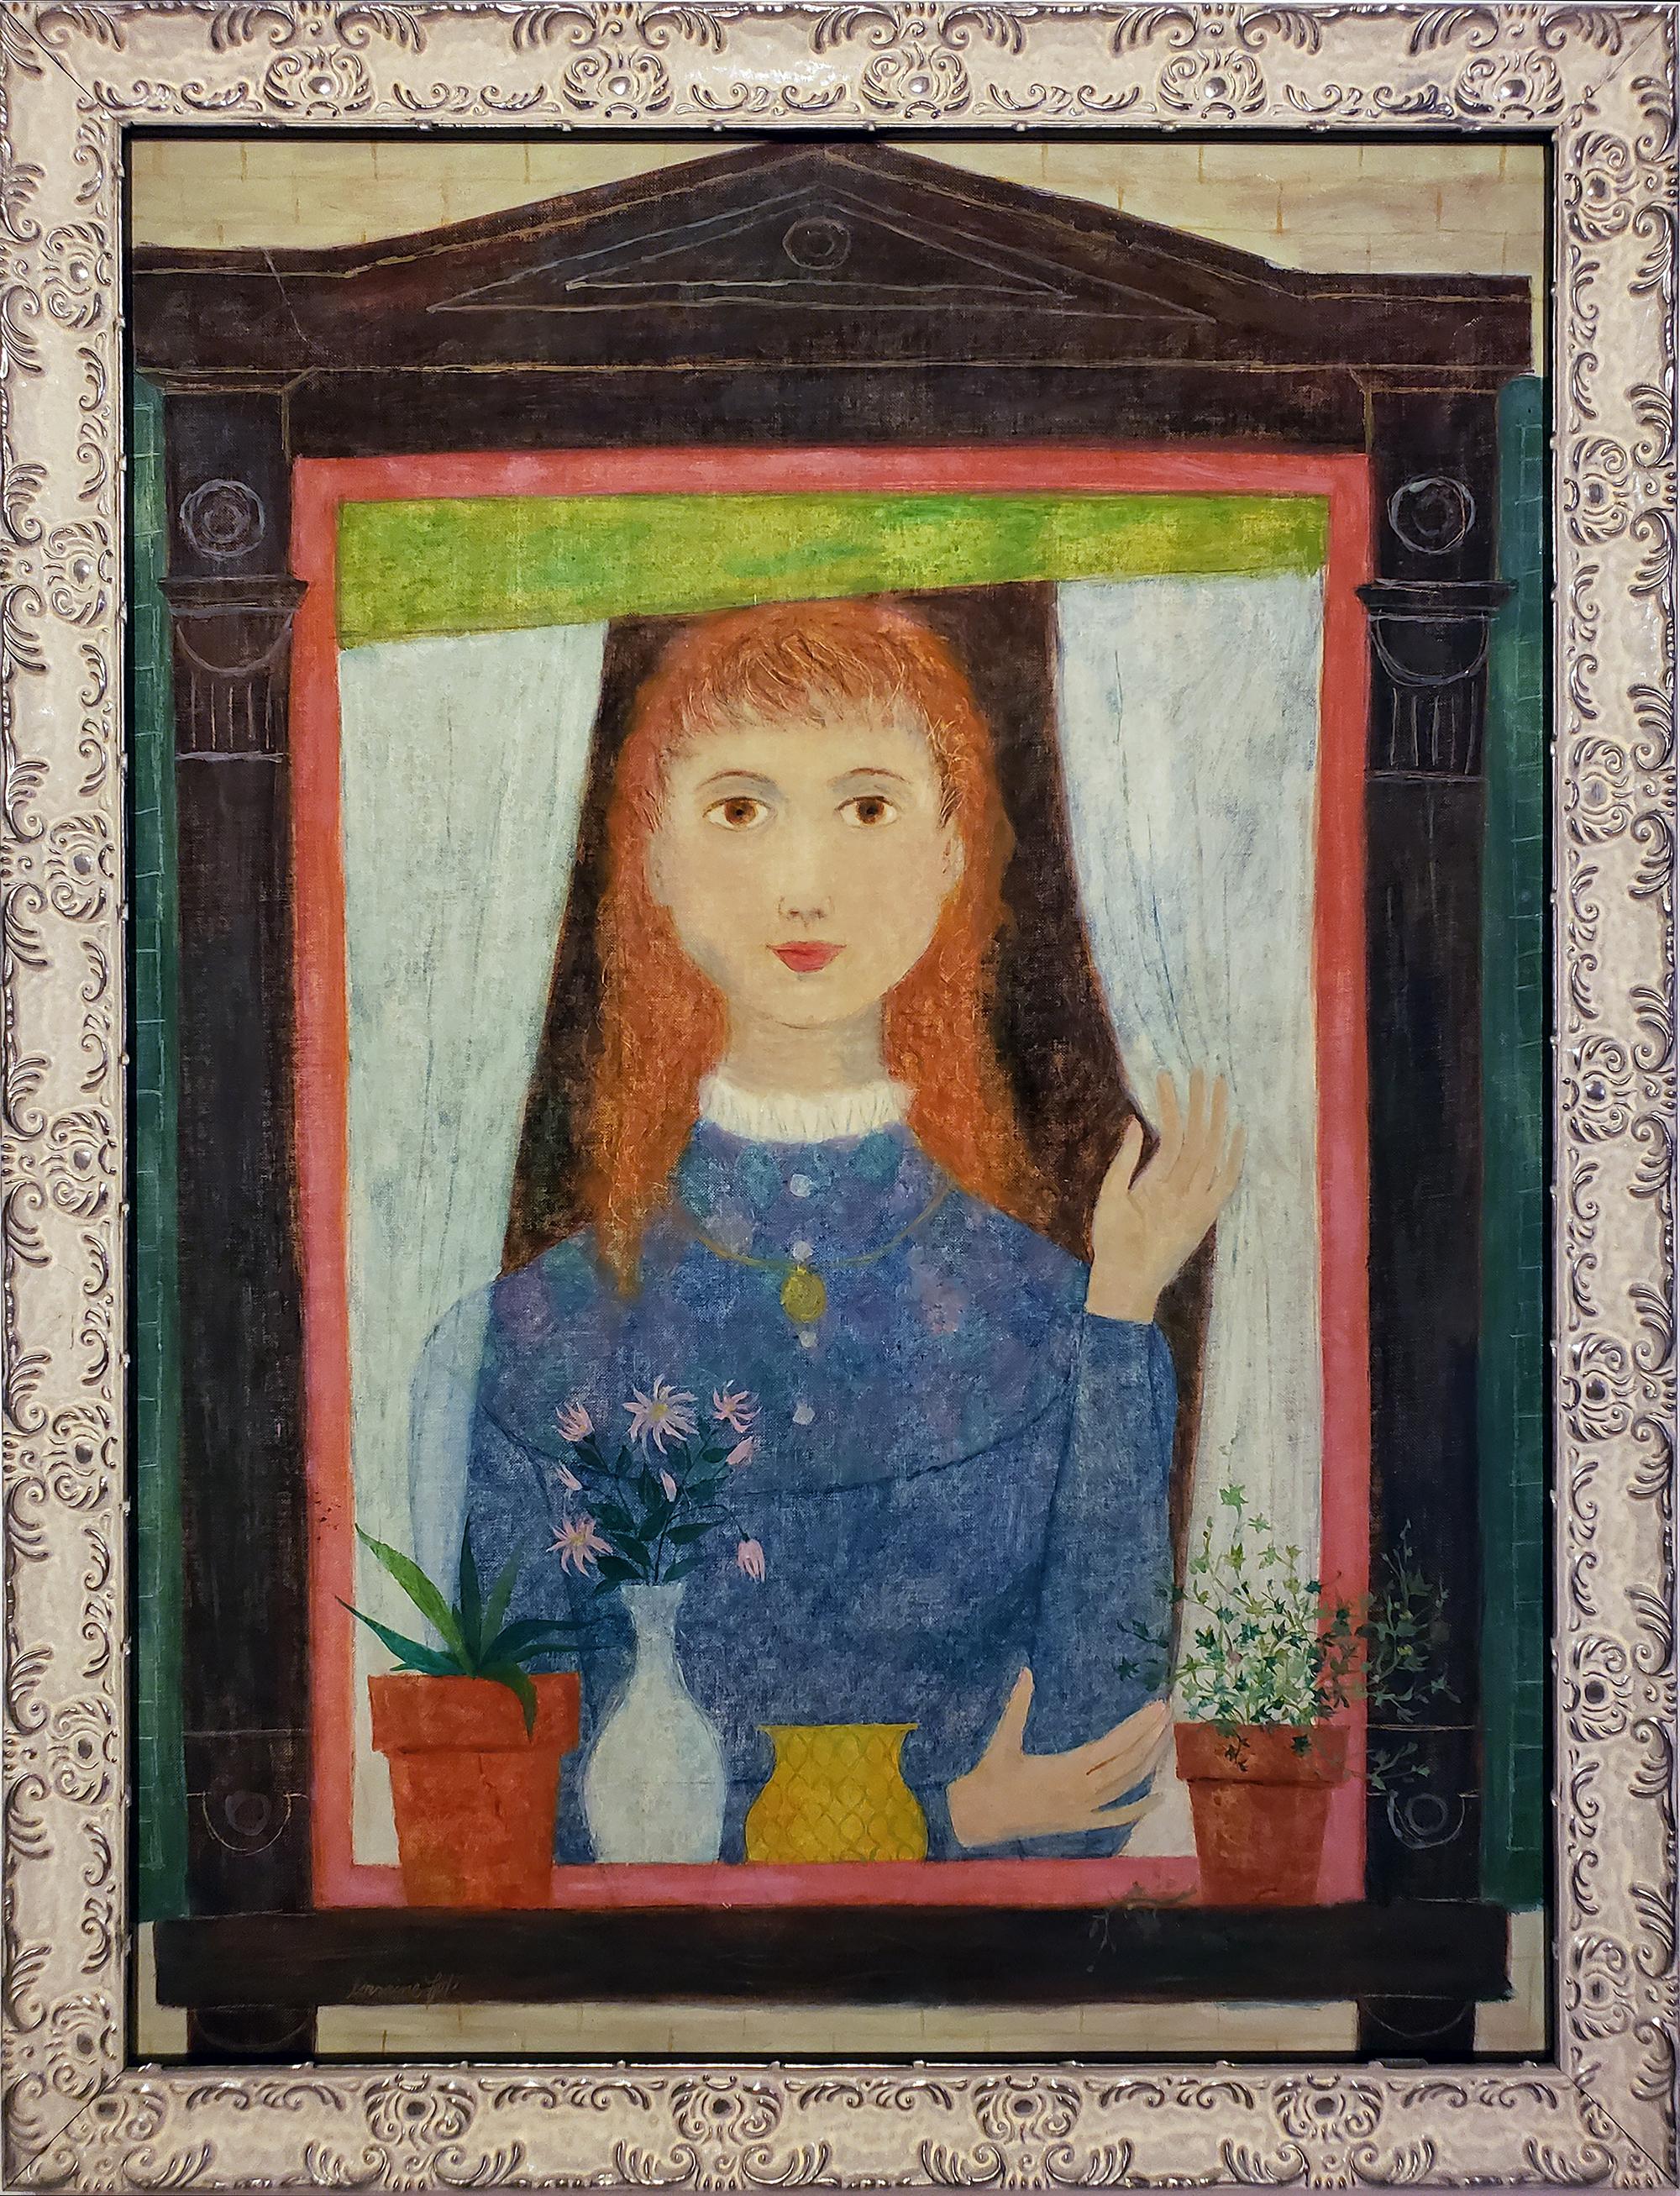 Lorraine Fox Figurative Painting - Redhead Girl in Window with Flower Pots